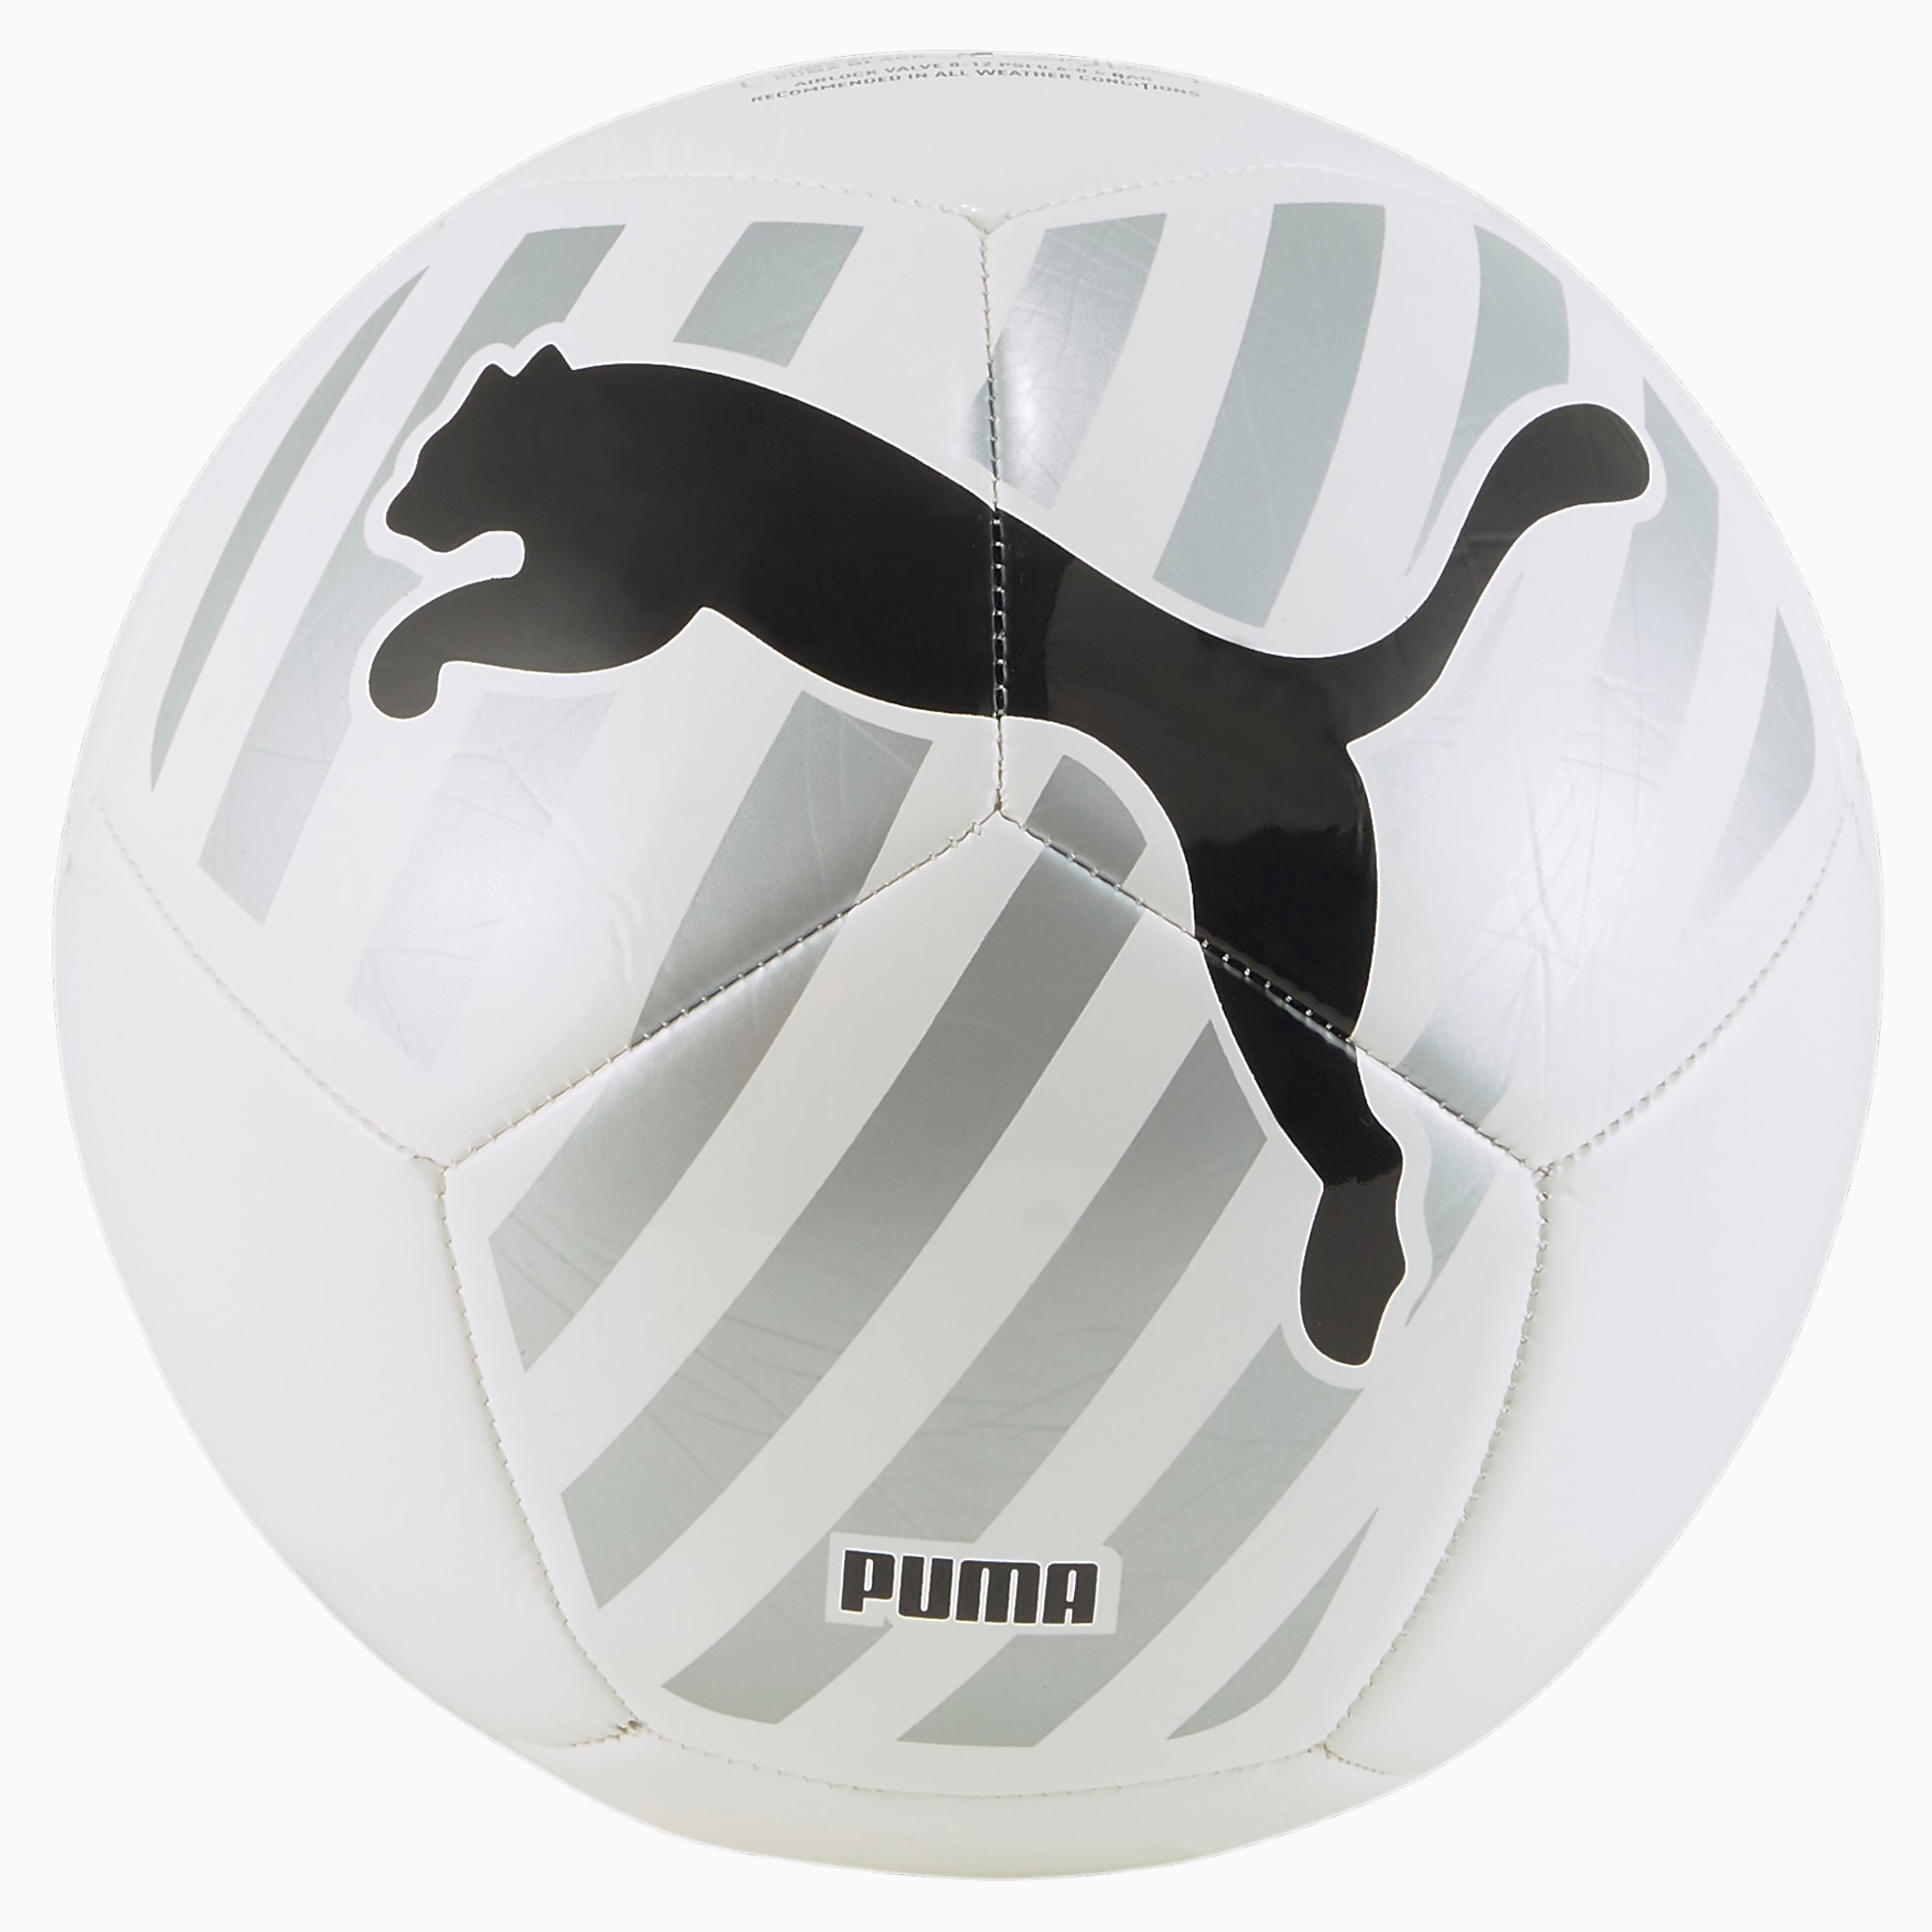 Puma voetbal big cat - maat 3 - wit/grijs